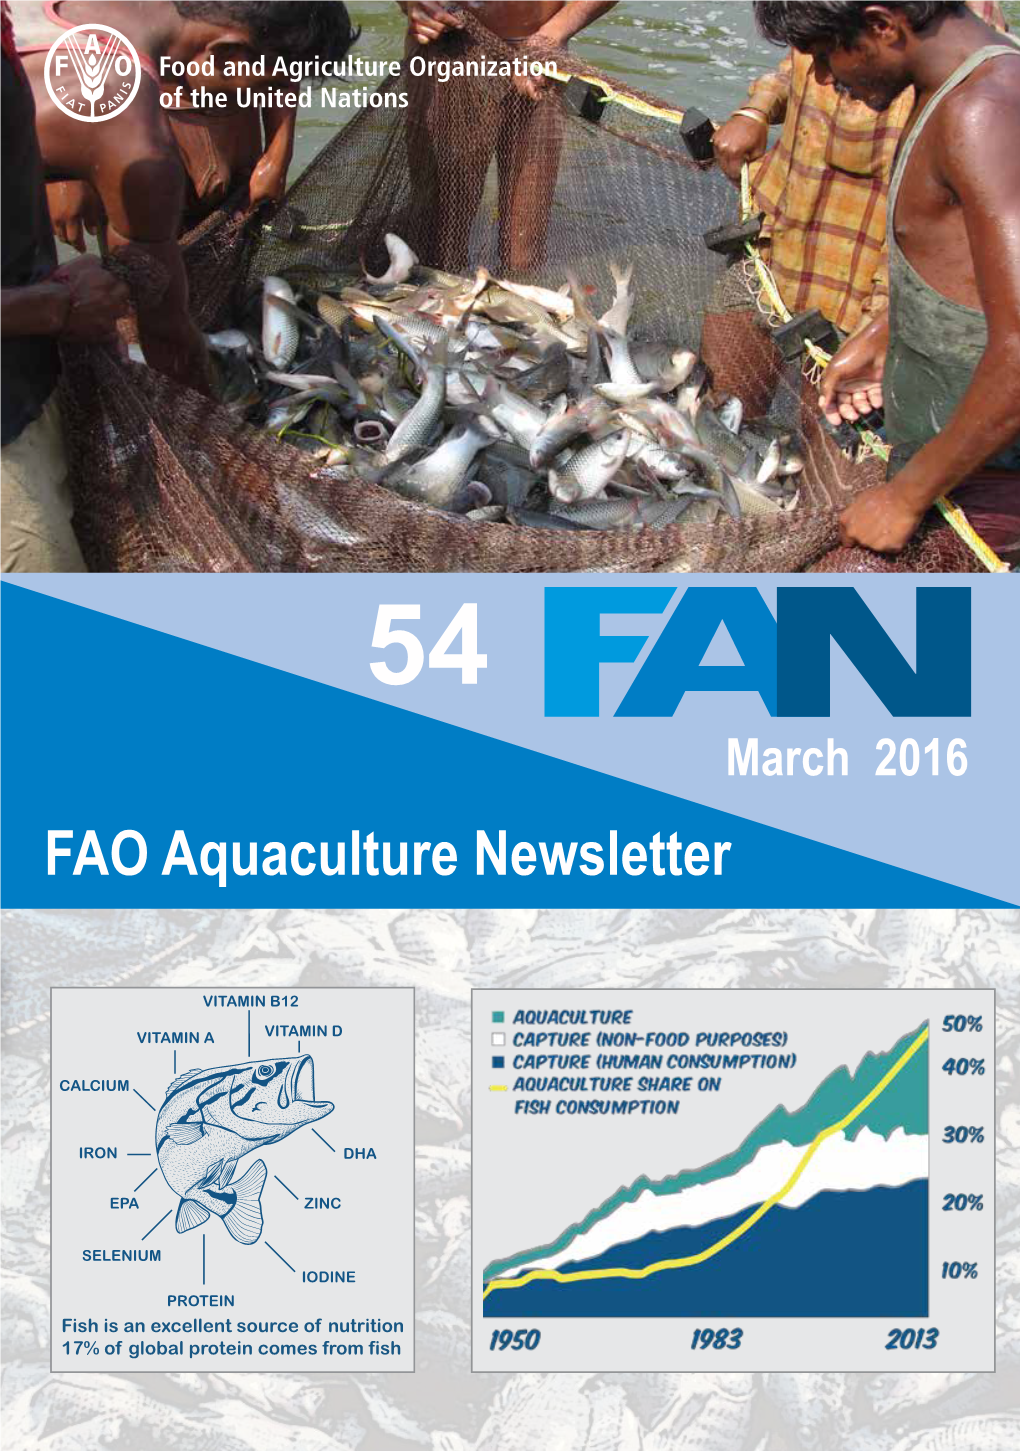 FAO Aquaculture Newsletter No. 54, March 2016